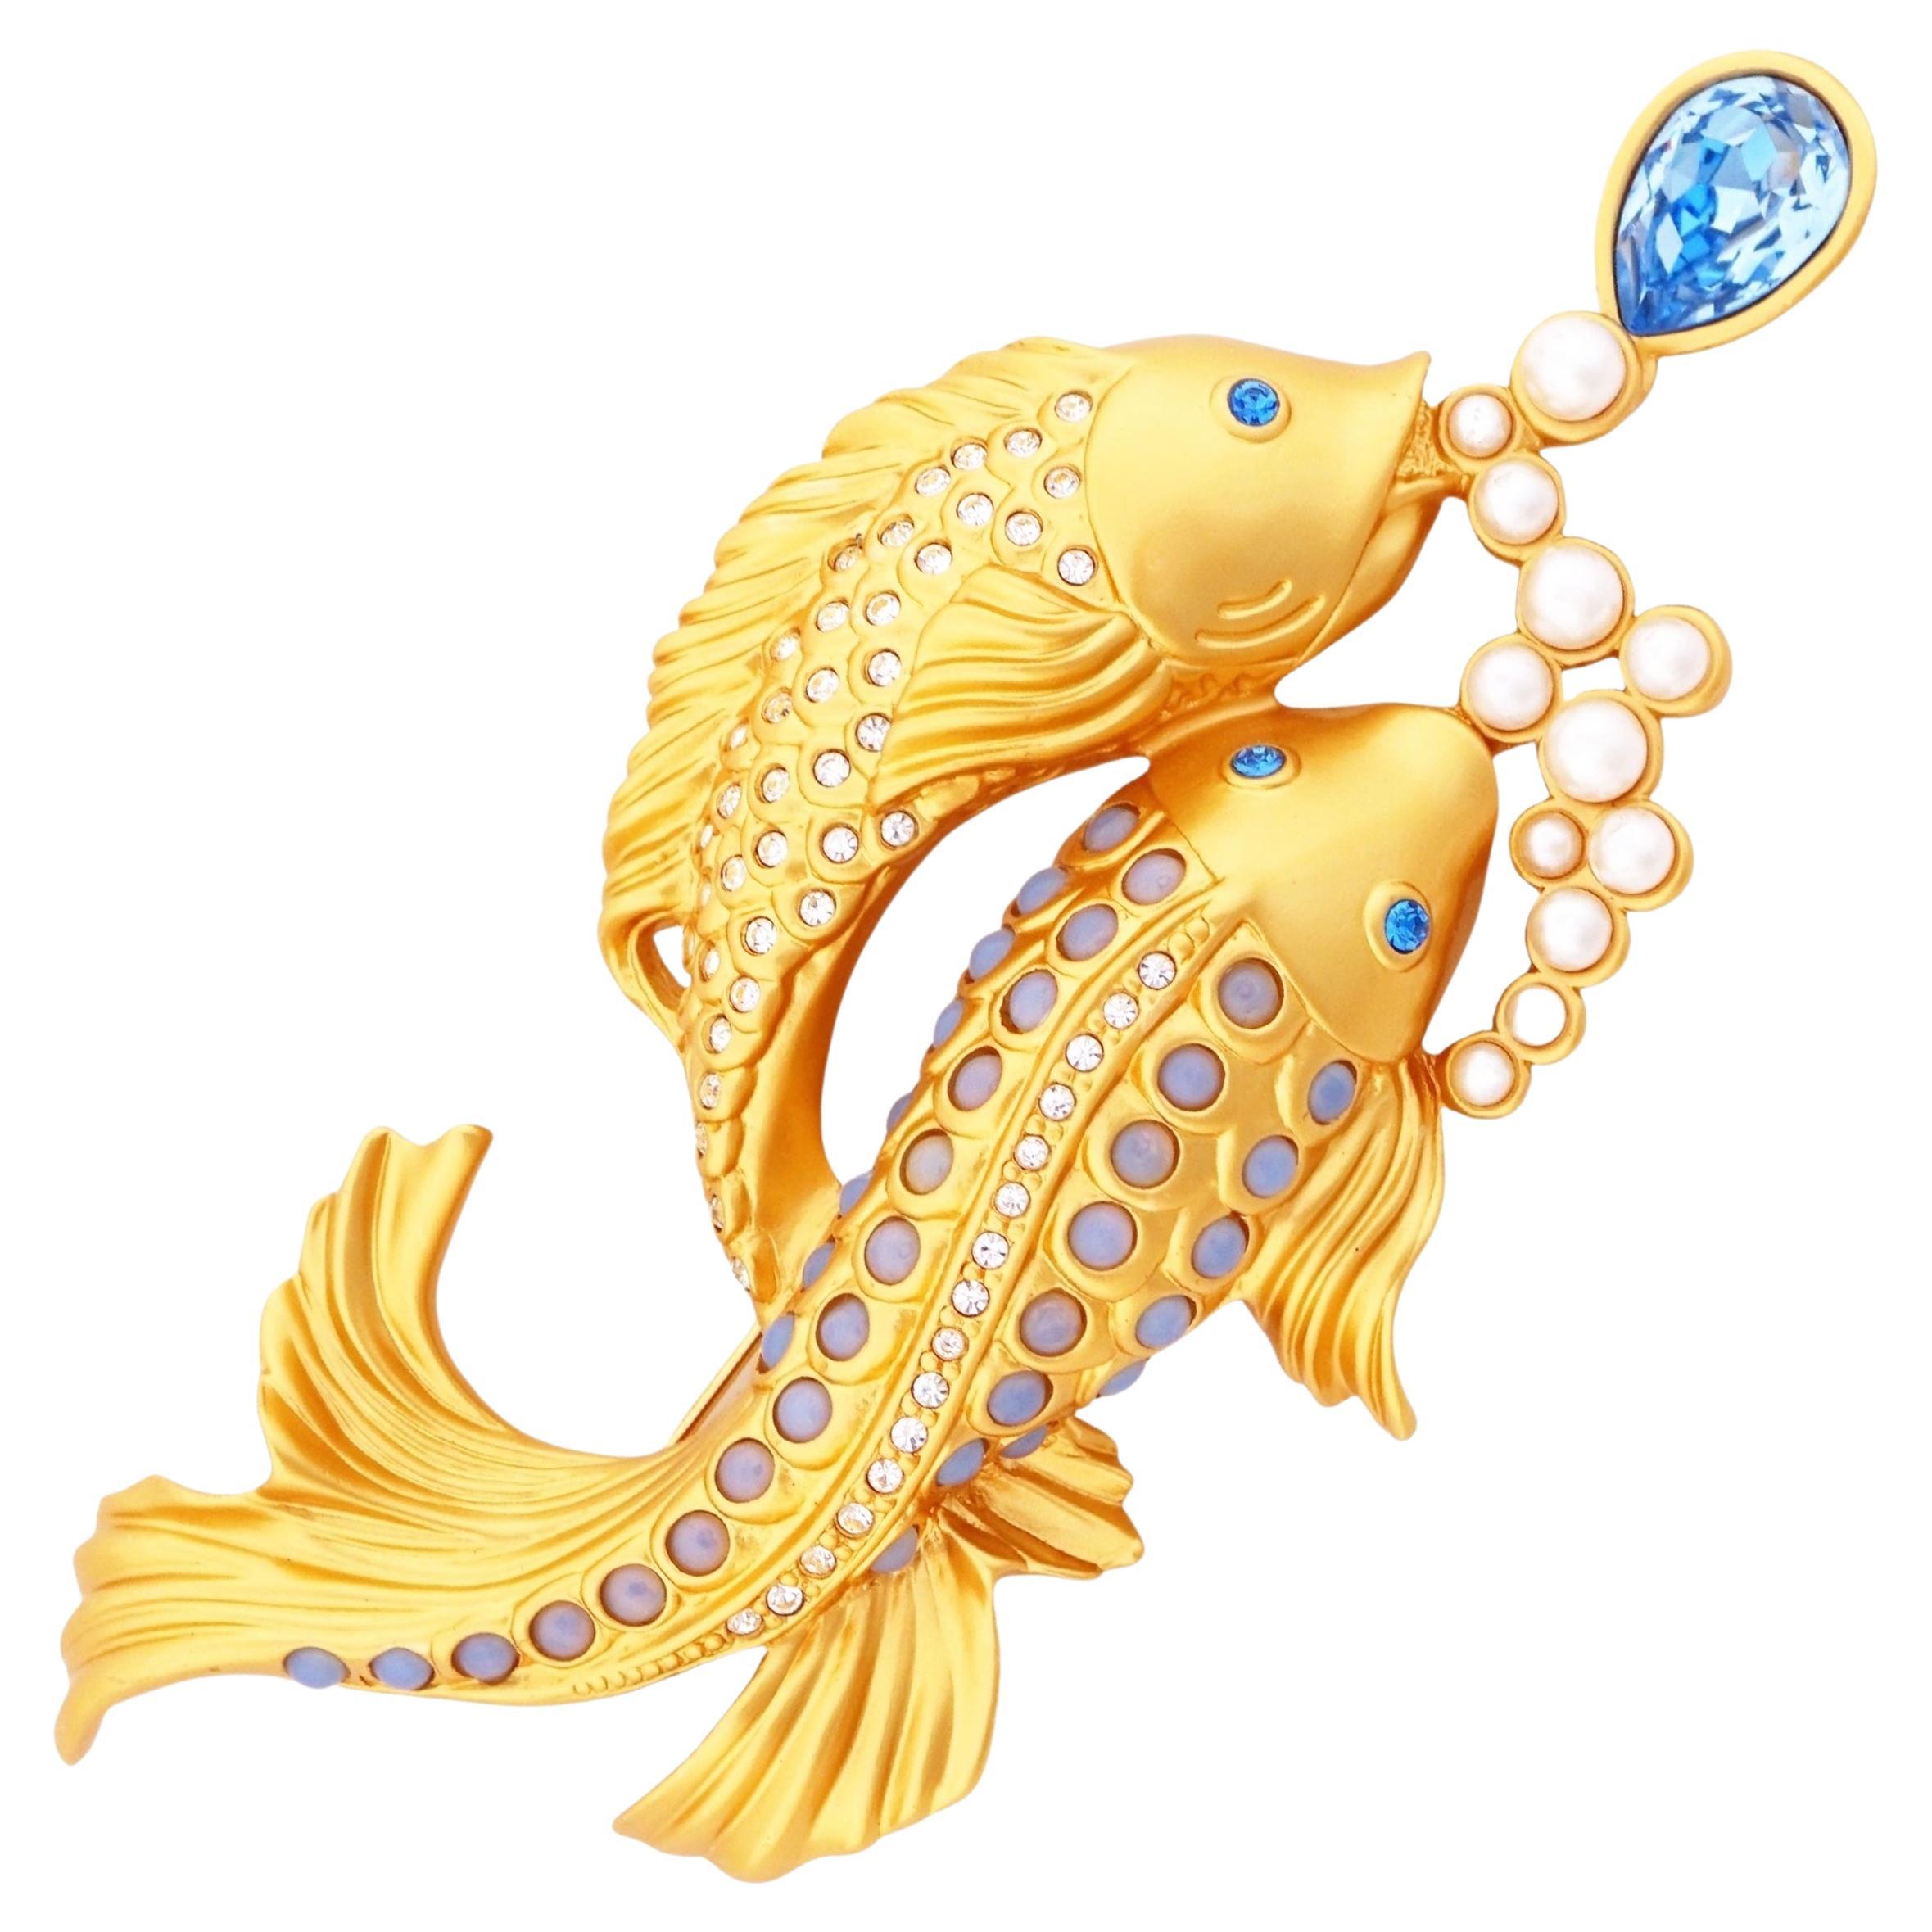 Satin Gold Koi Fish "Sea Shimmer" Brooch By Elizabeth Taylor For Avon, 1990s